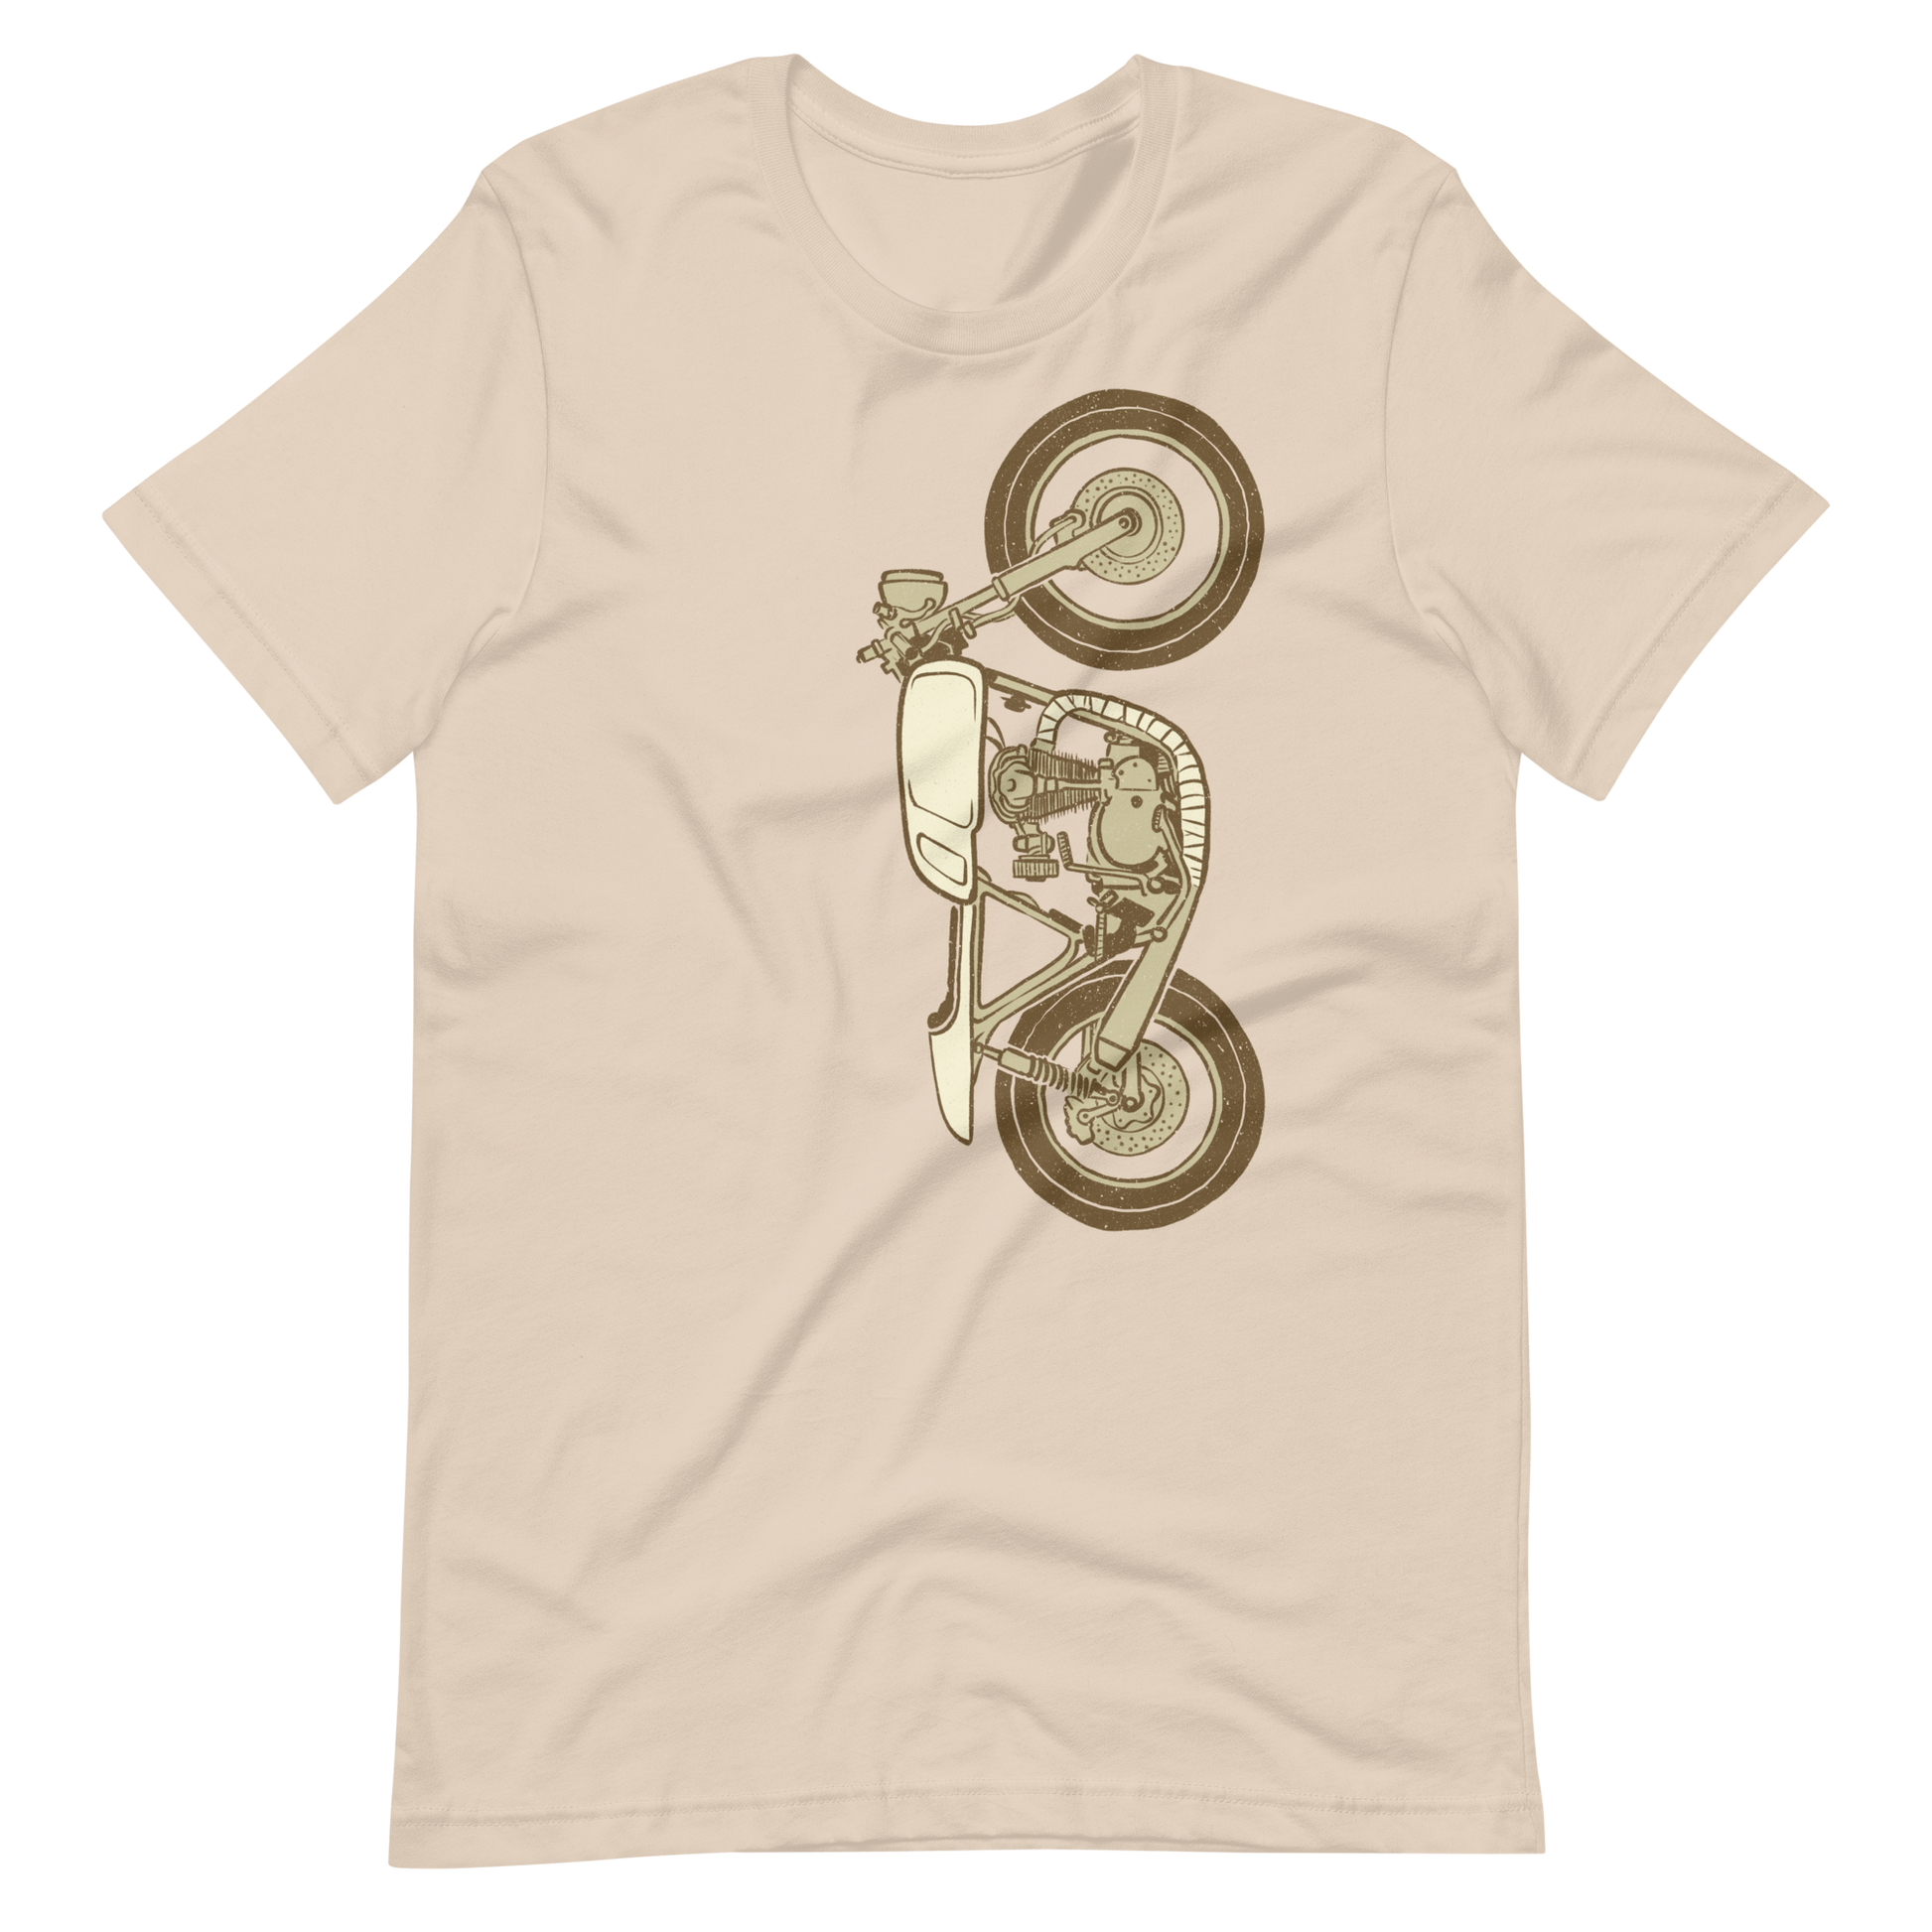 Sand Cafe Racer Tshirt Race Biker Shirt Motorbike Cool Gift For Him Coffee Lover Biker Shirt Motorcycle Rider Shirt Road Trip Journey Shirt